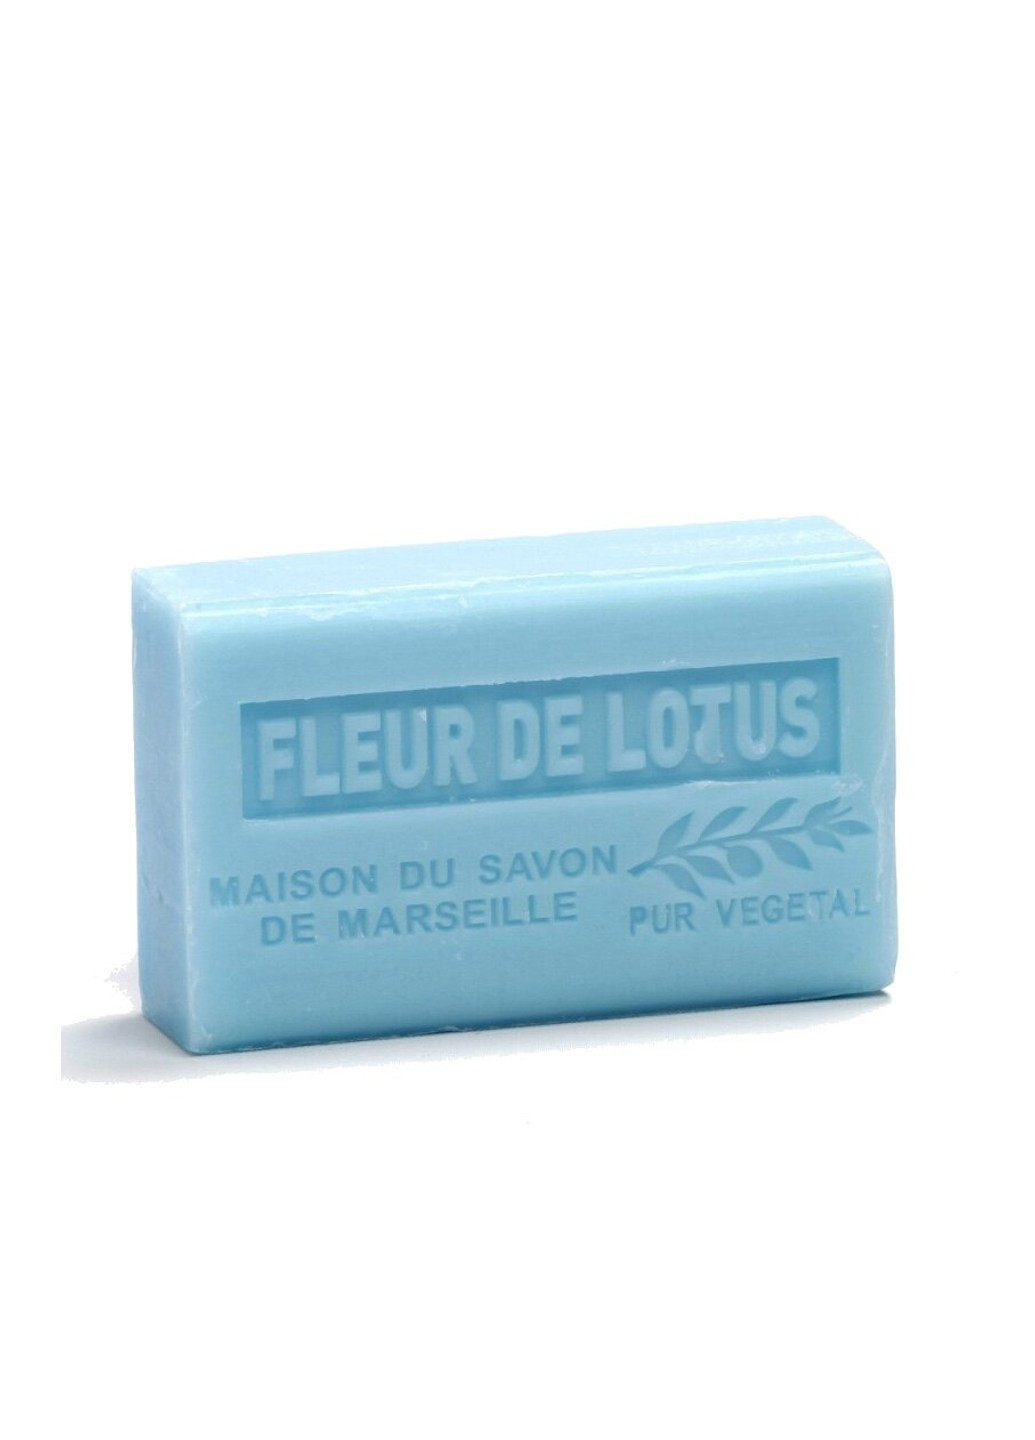 Парфюмированное мыло La Maison du Savon Marseille SAV60 KARITE BIO - FLEUR DE LOTUS 60гр. (M11103) La Maison du Savon de Marseille